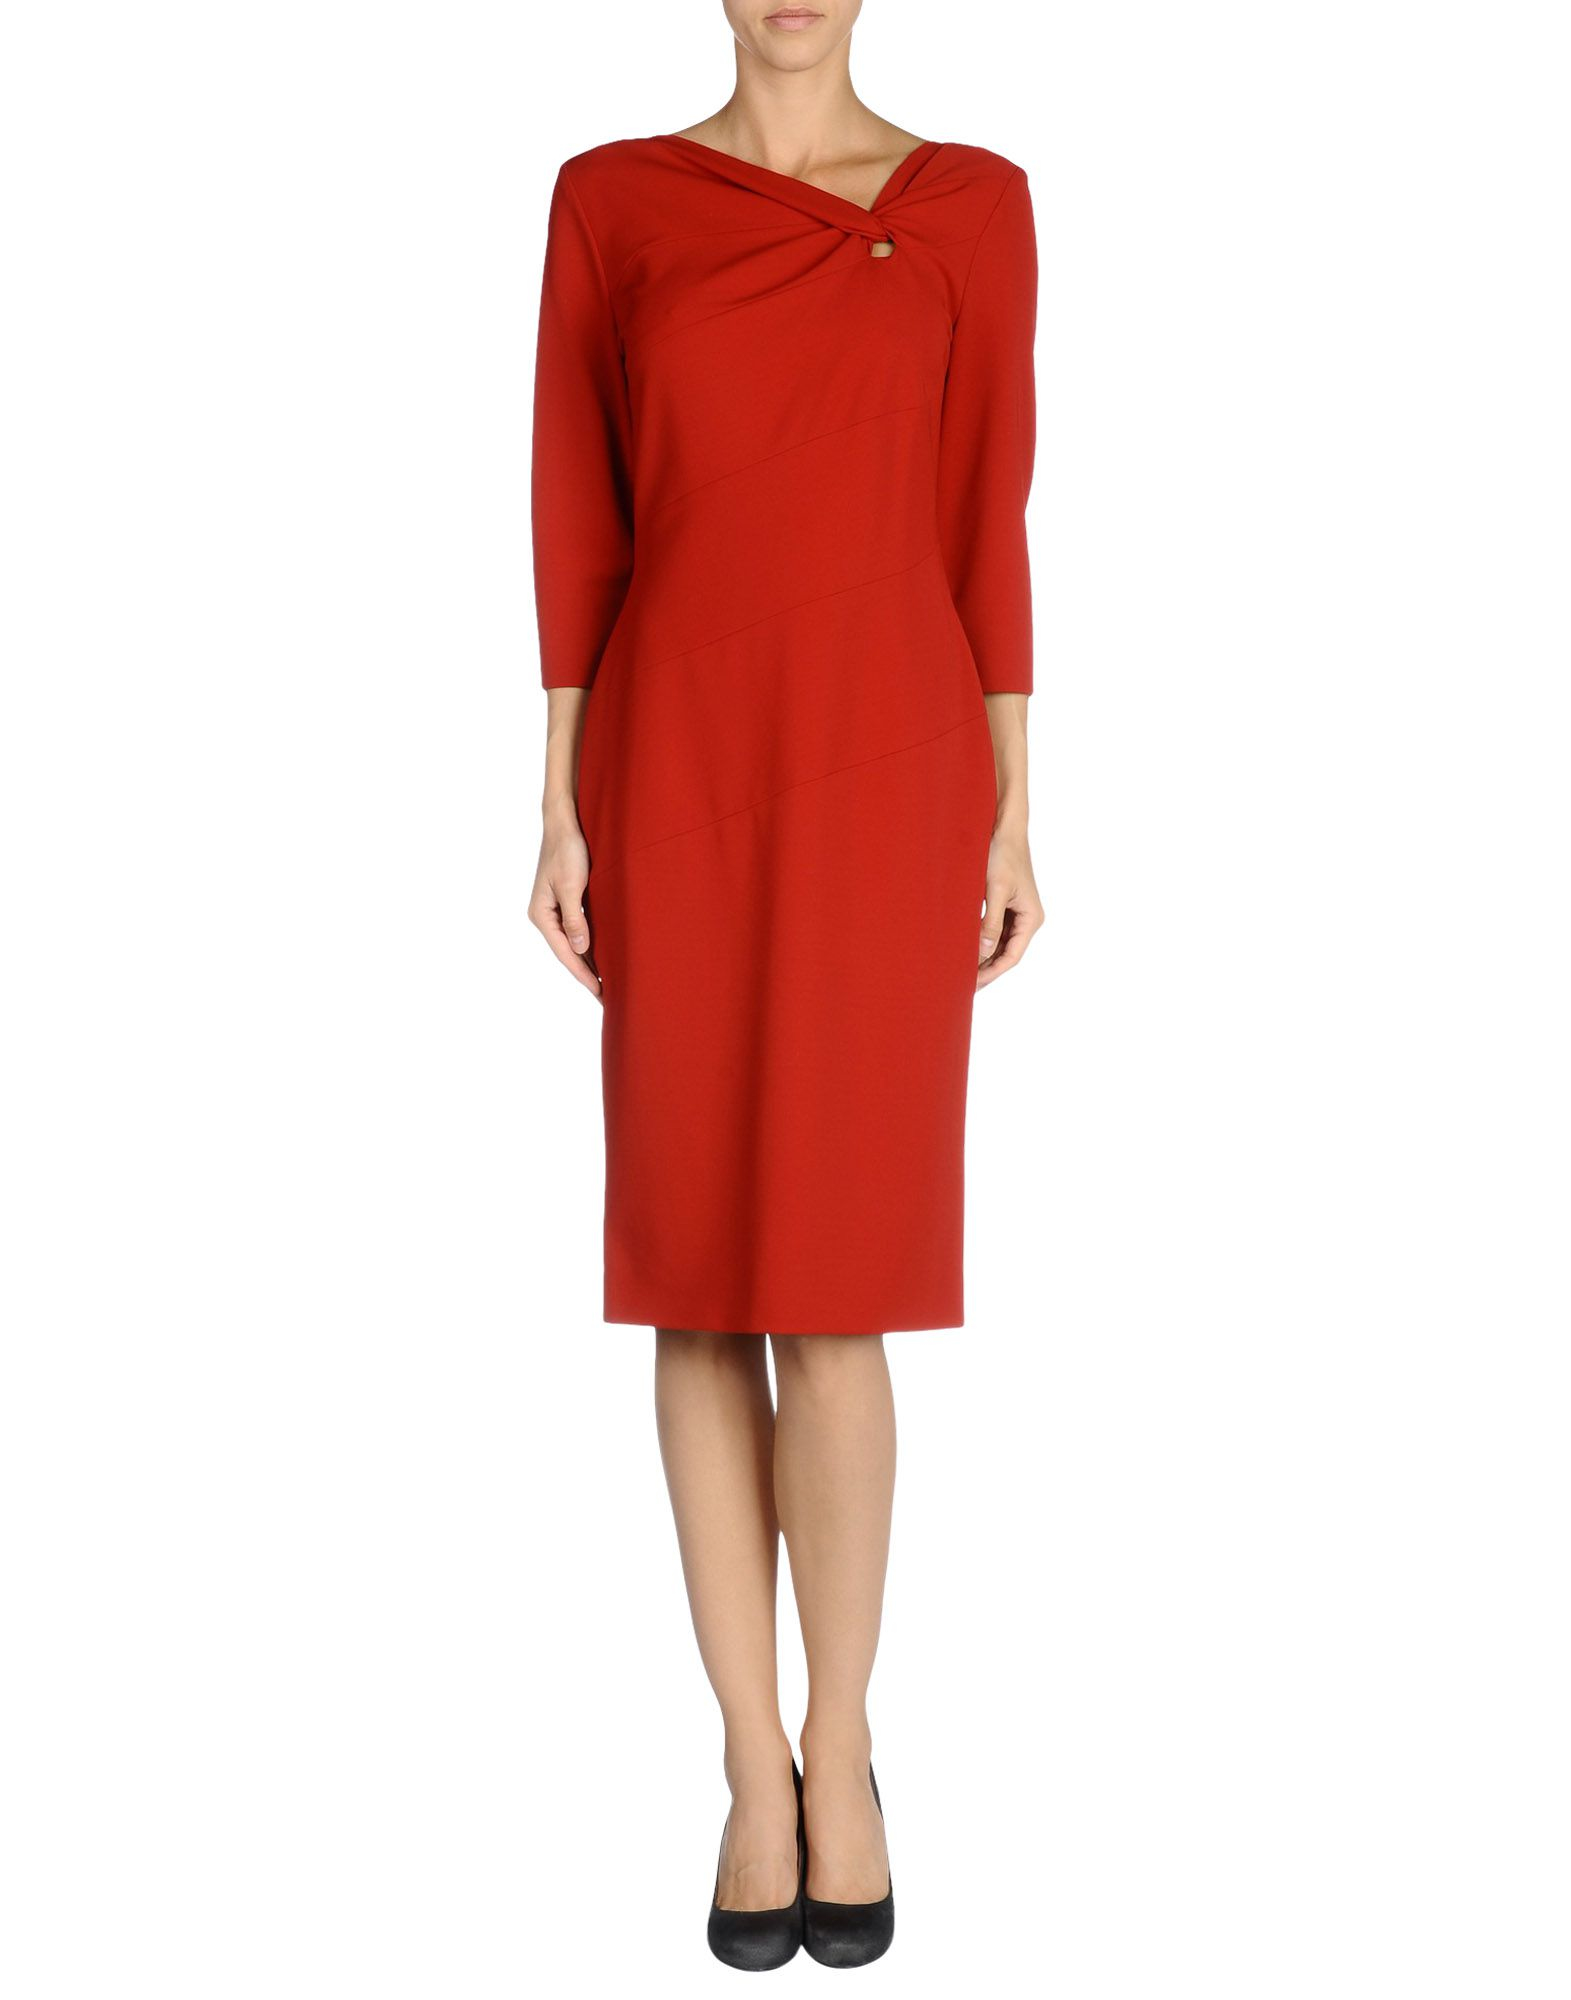 Lyst - Escada Knee-length Dress in Red